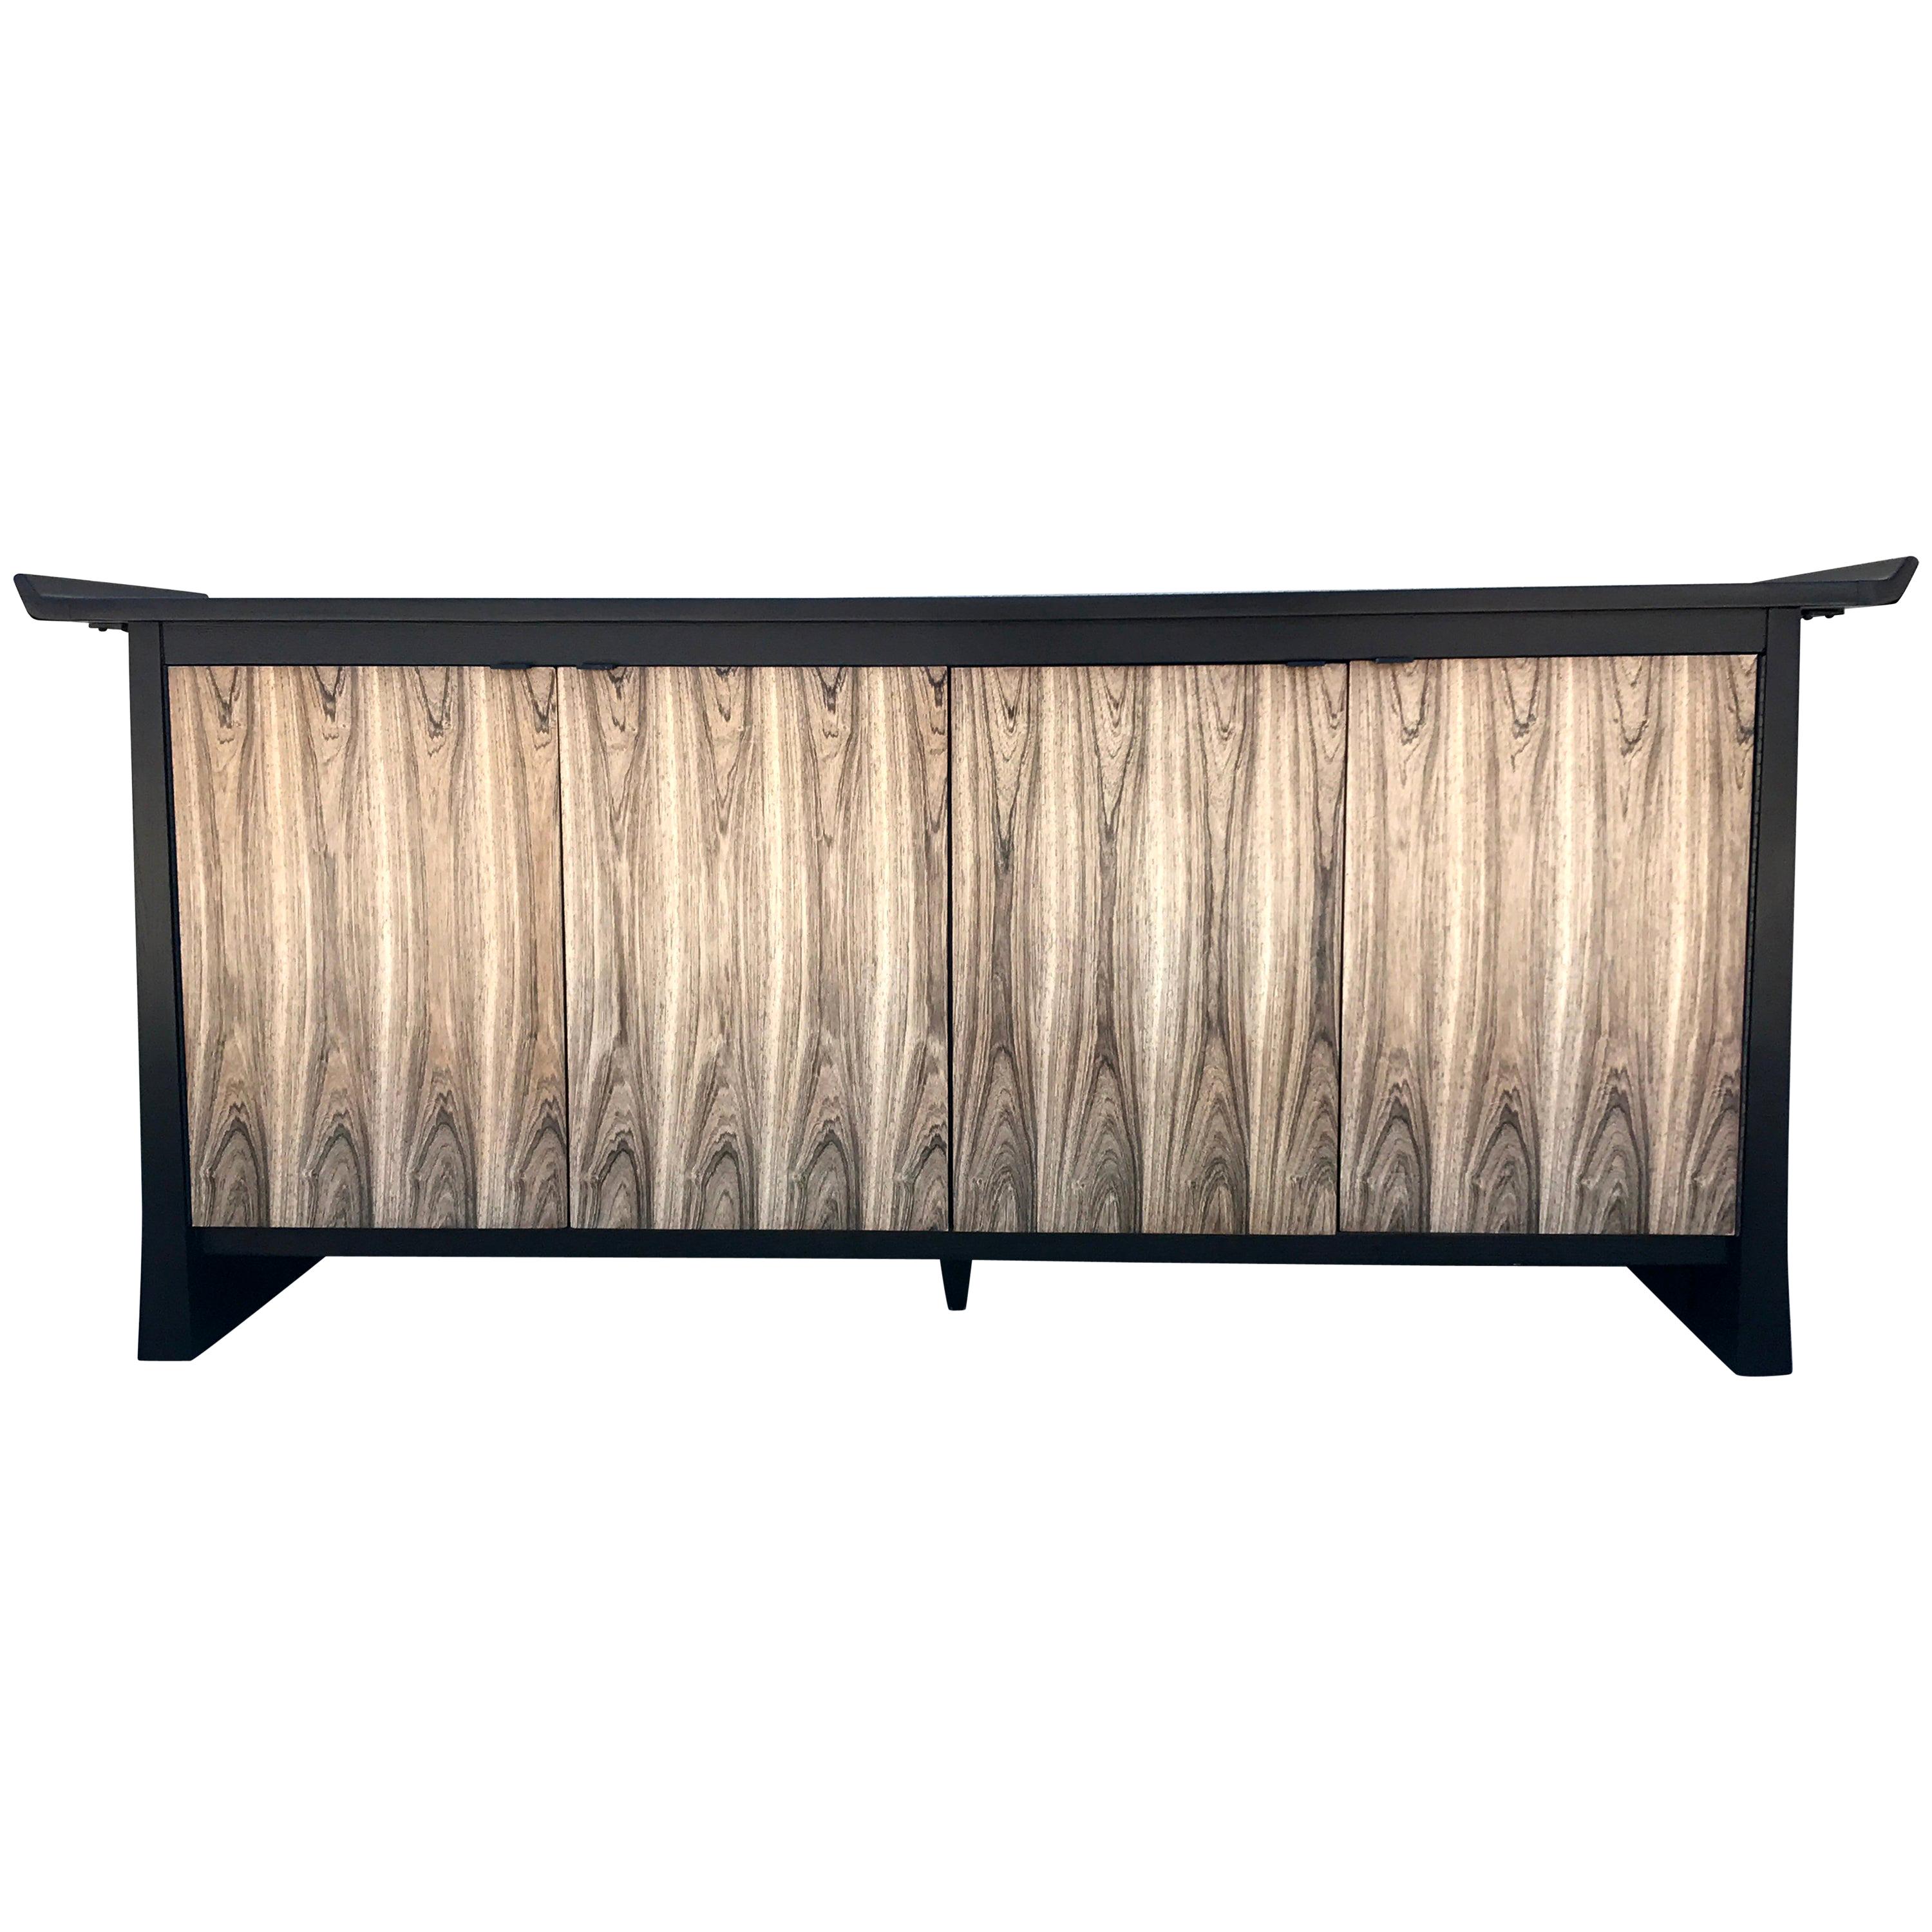 Two-Tone Asian Flair Walnut Sideboard by Bernhardt